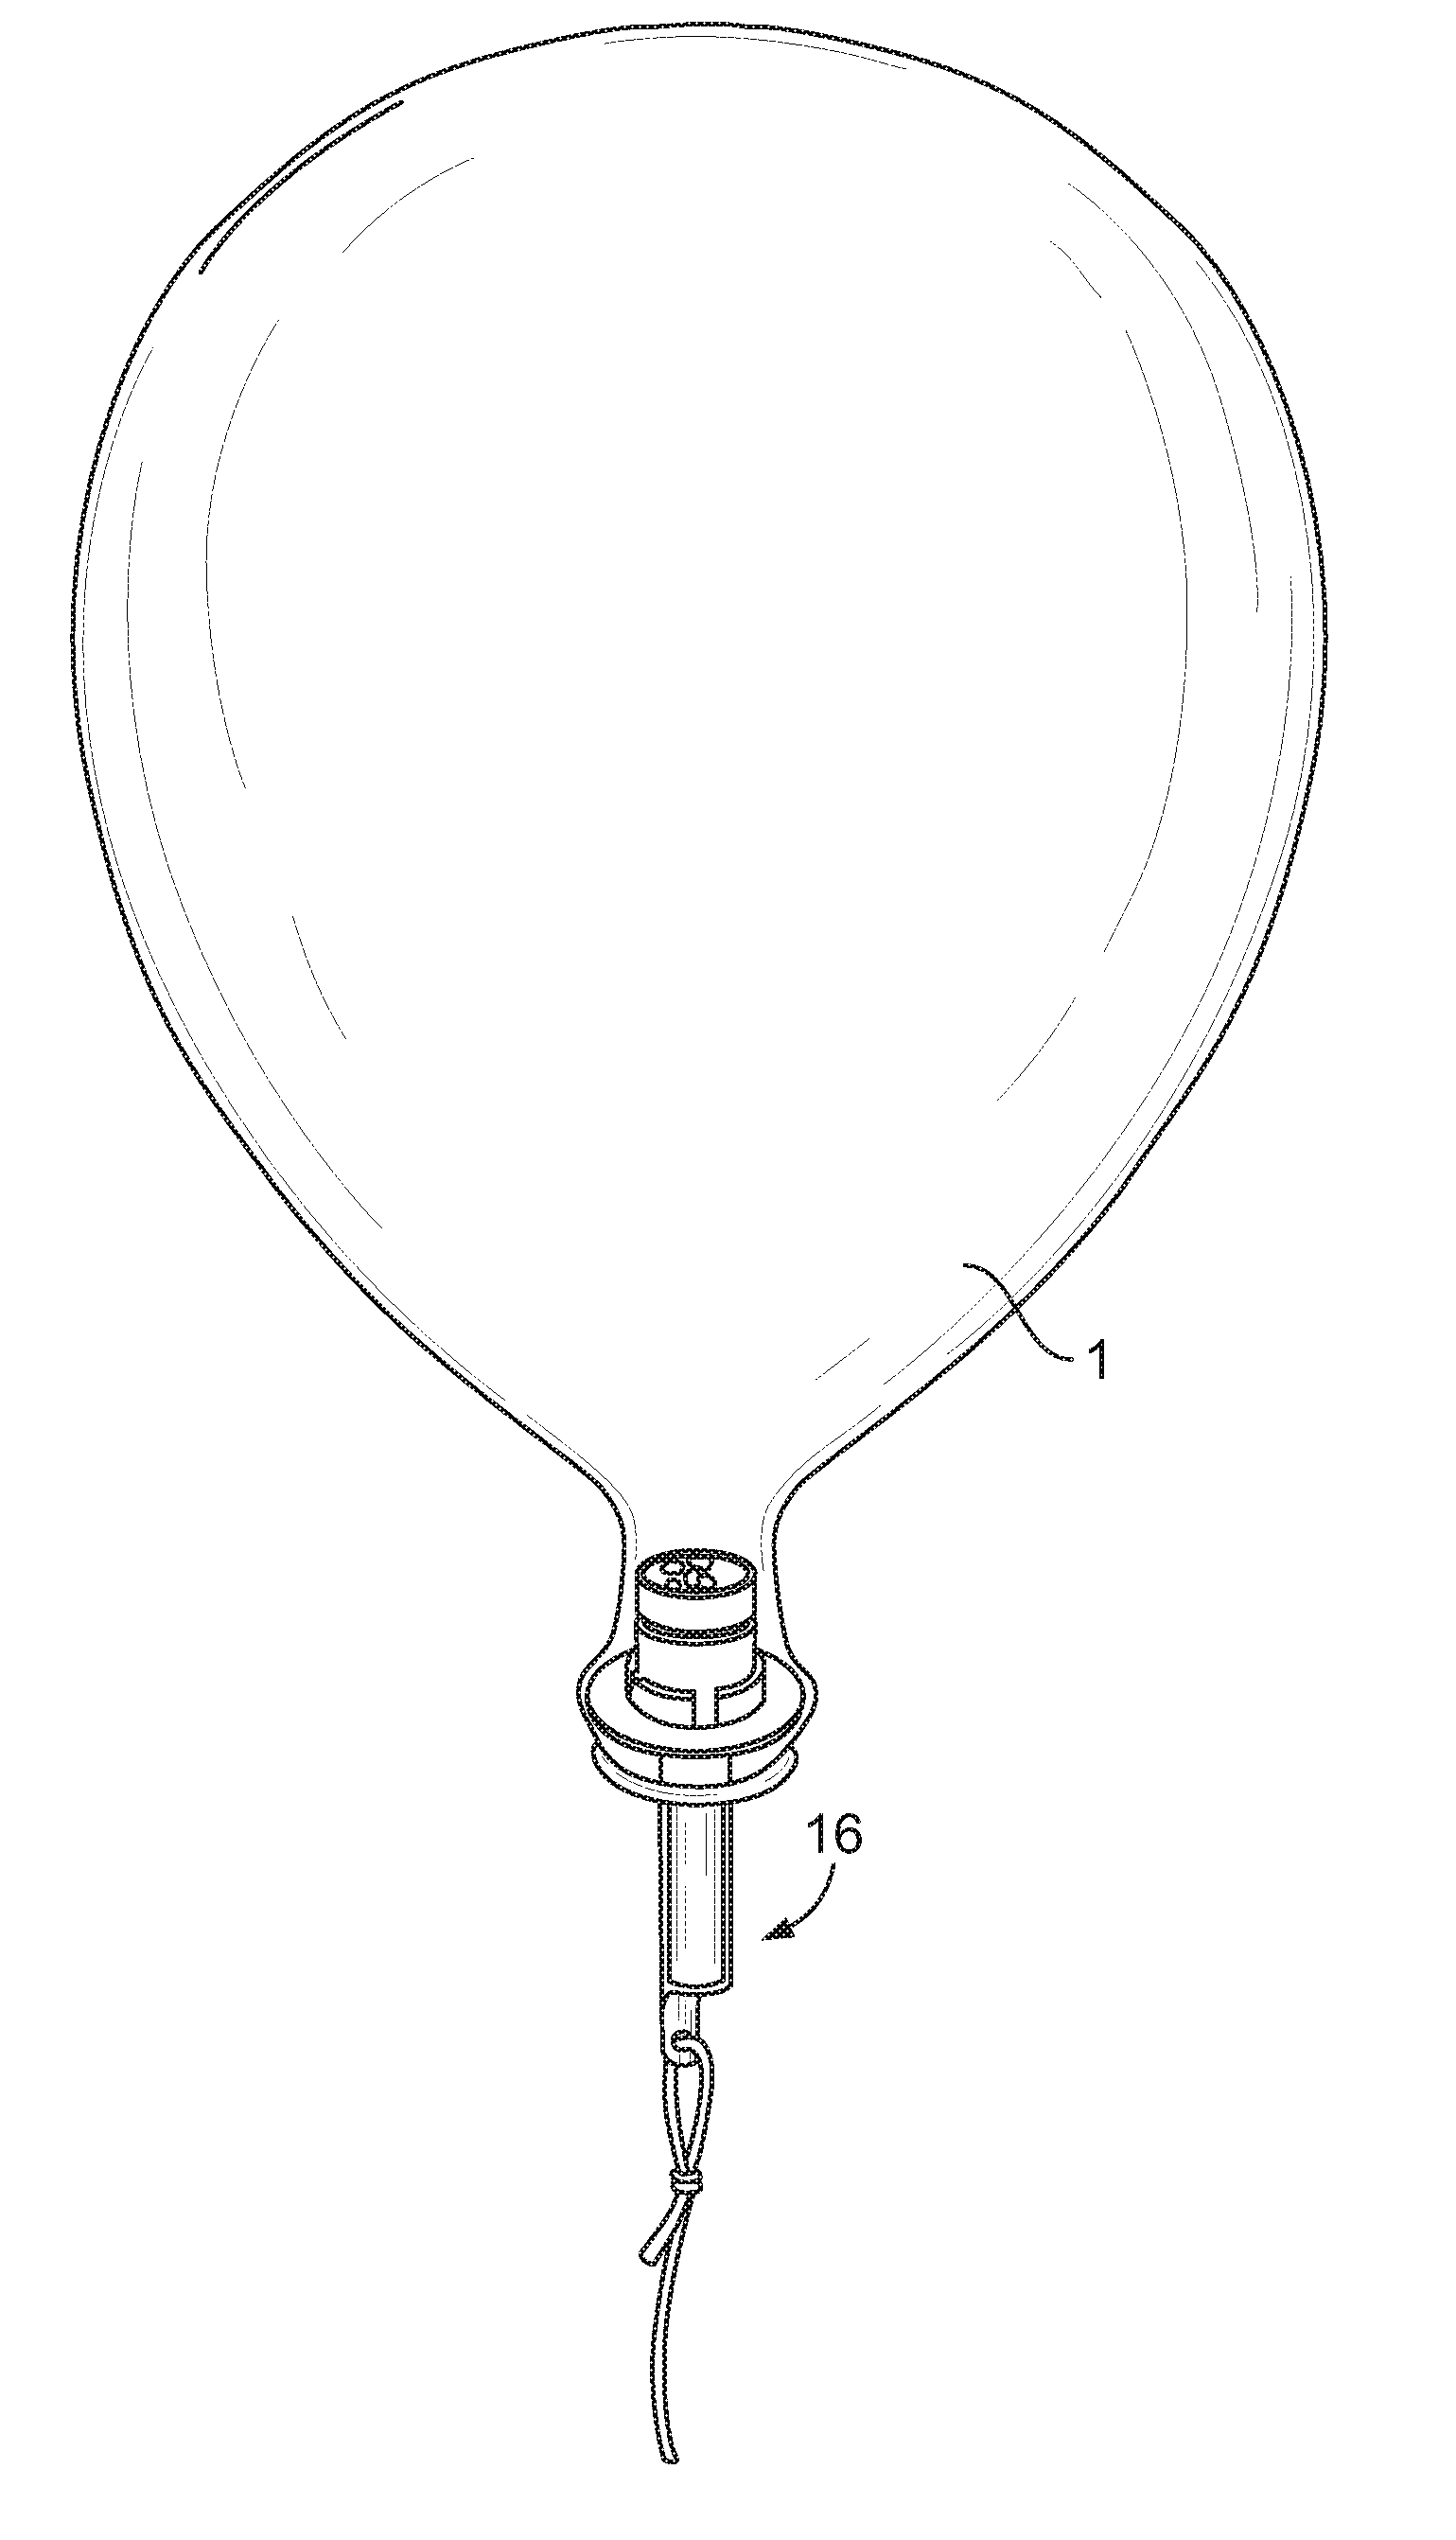 Externally switchable illuminated balloon inflator